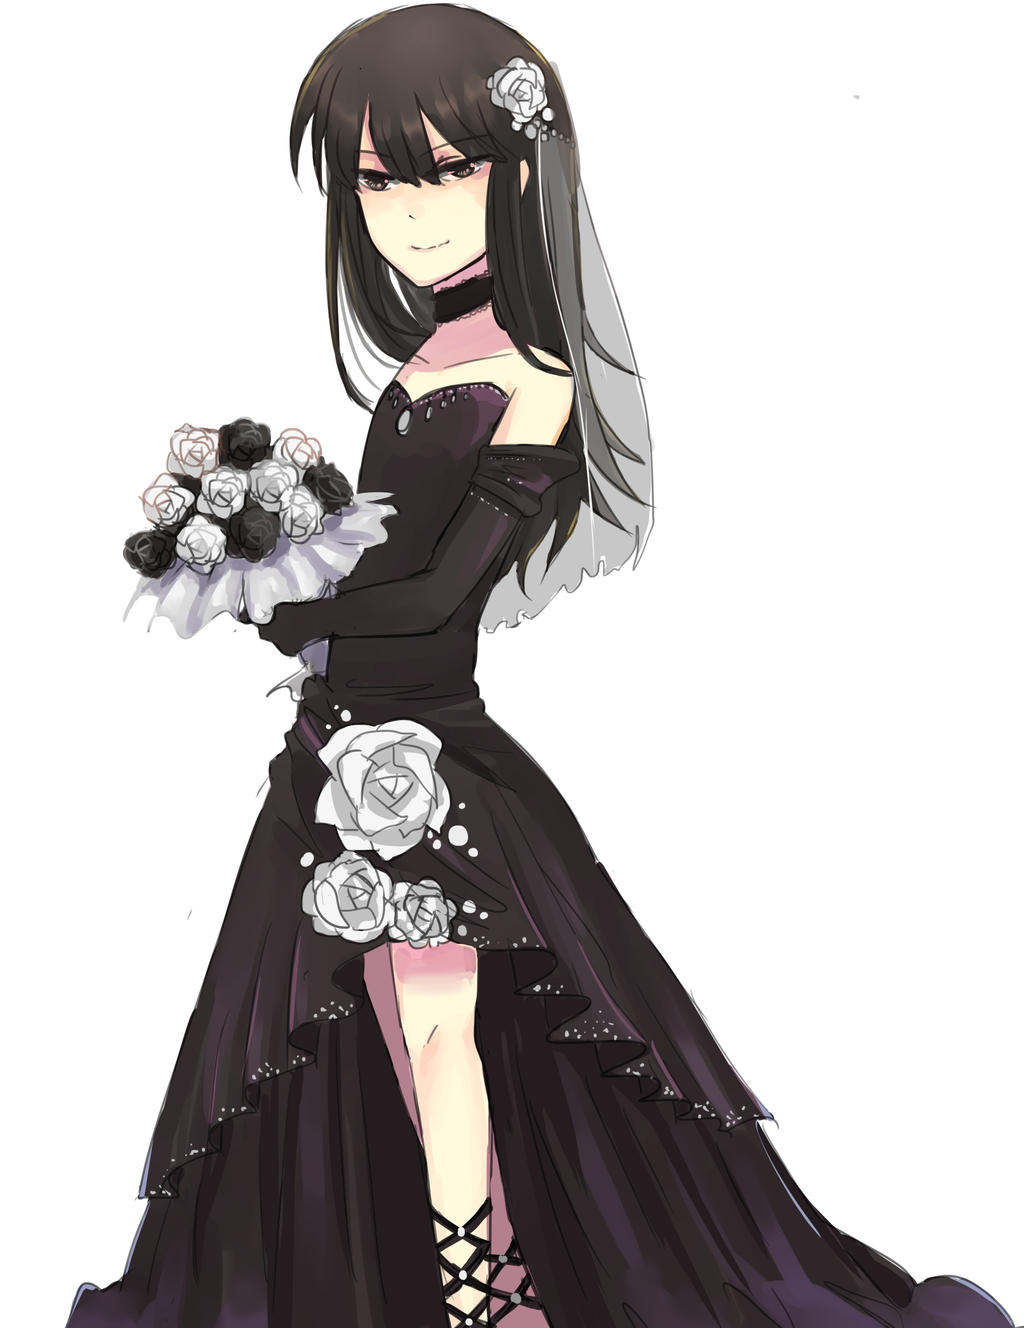 Black wedding dress by MythPy on DeviantArt